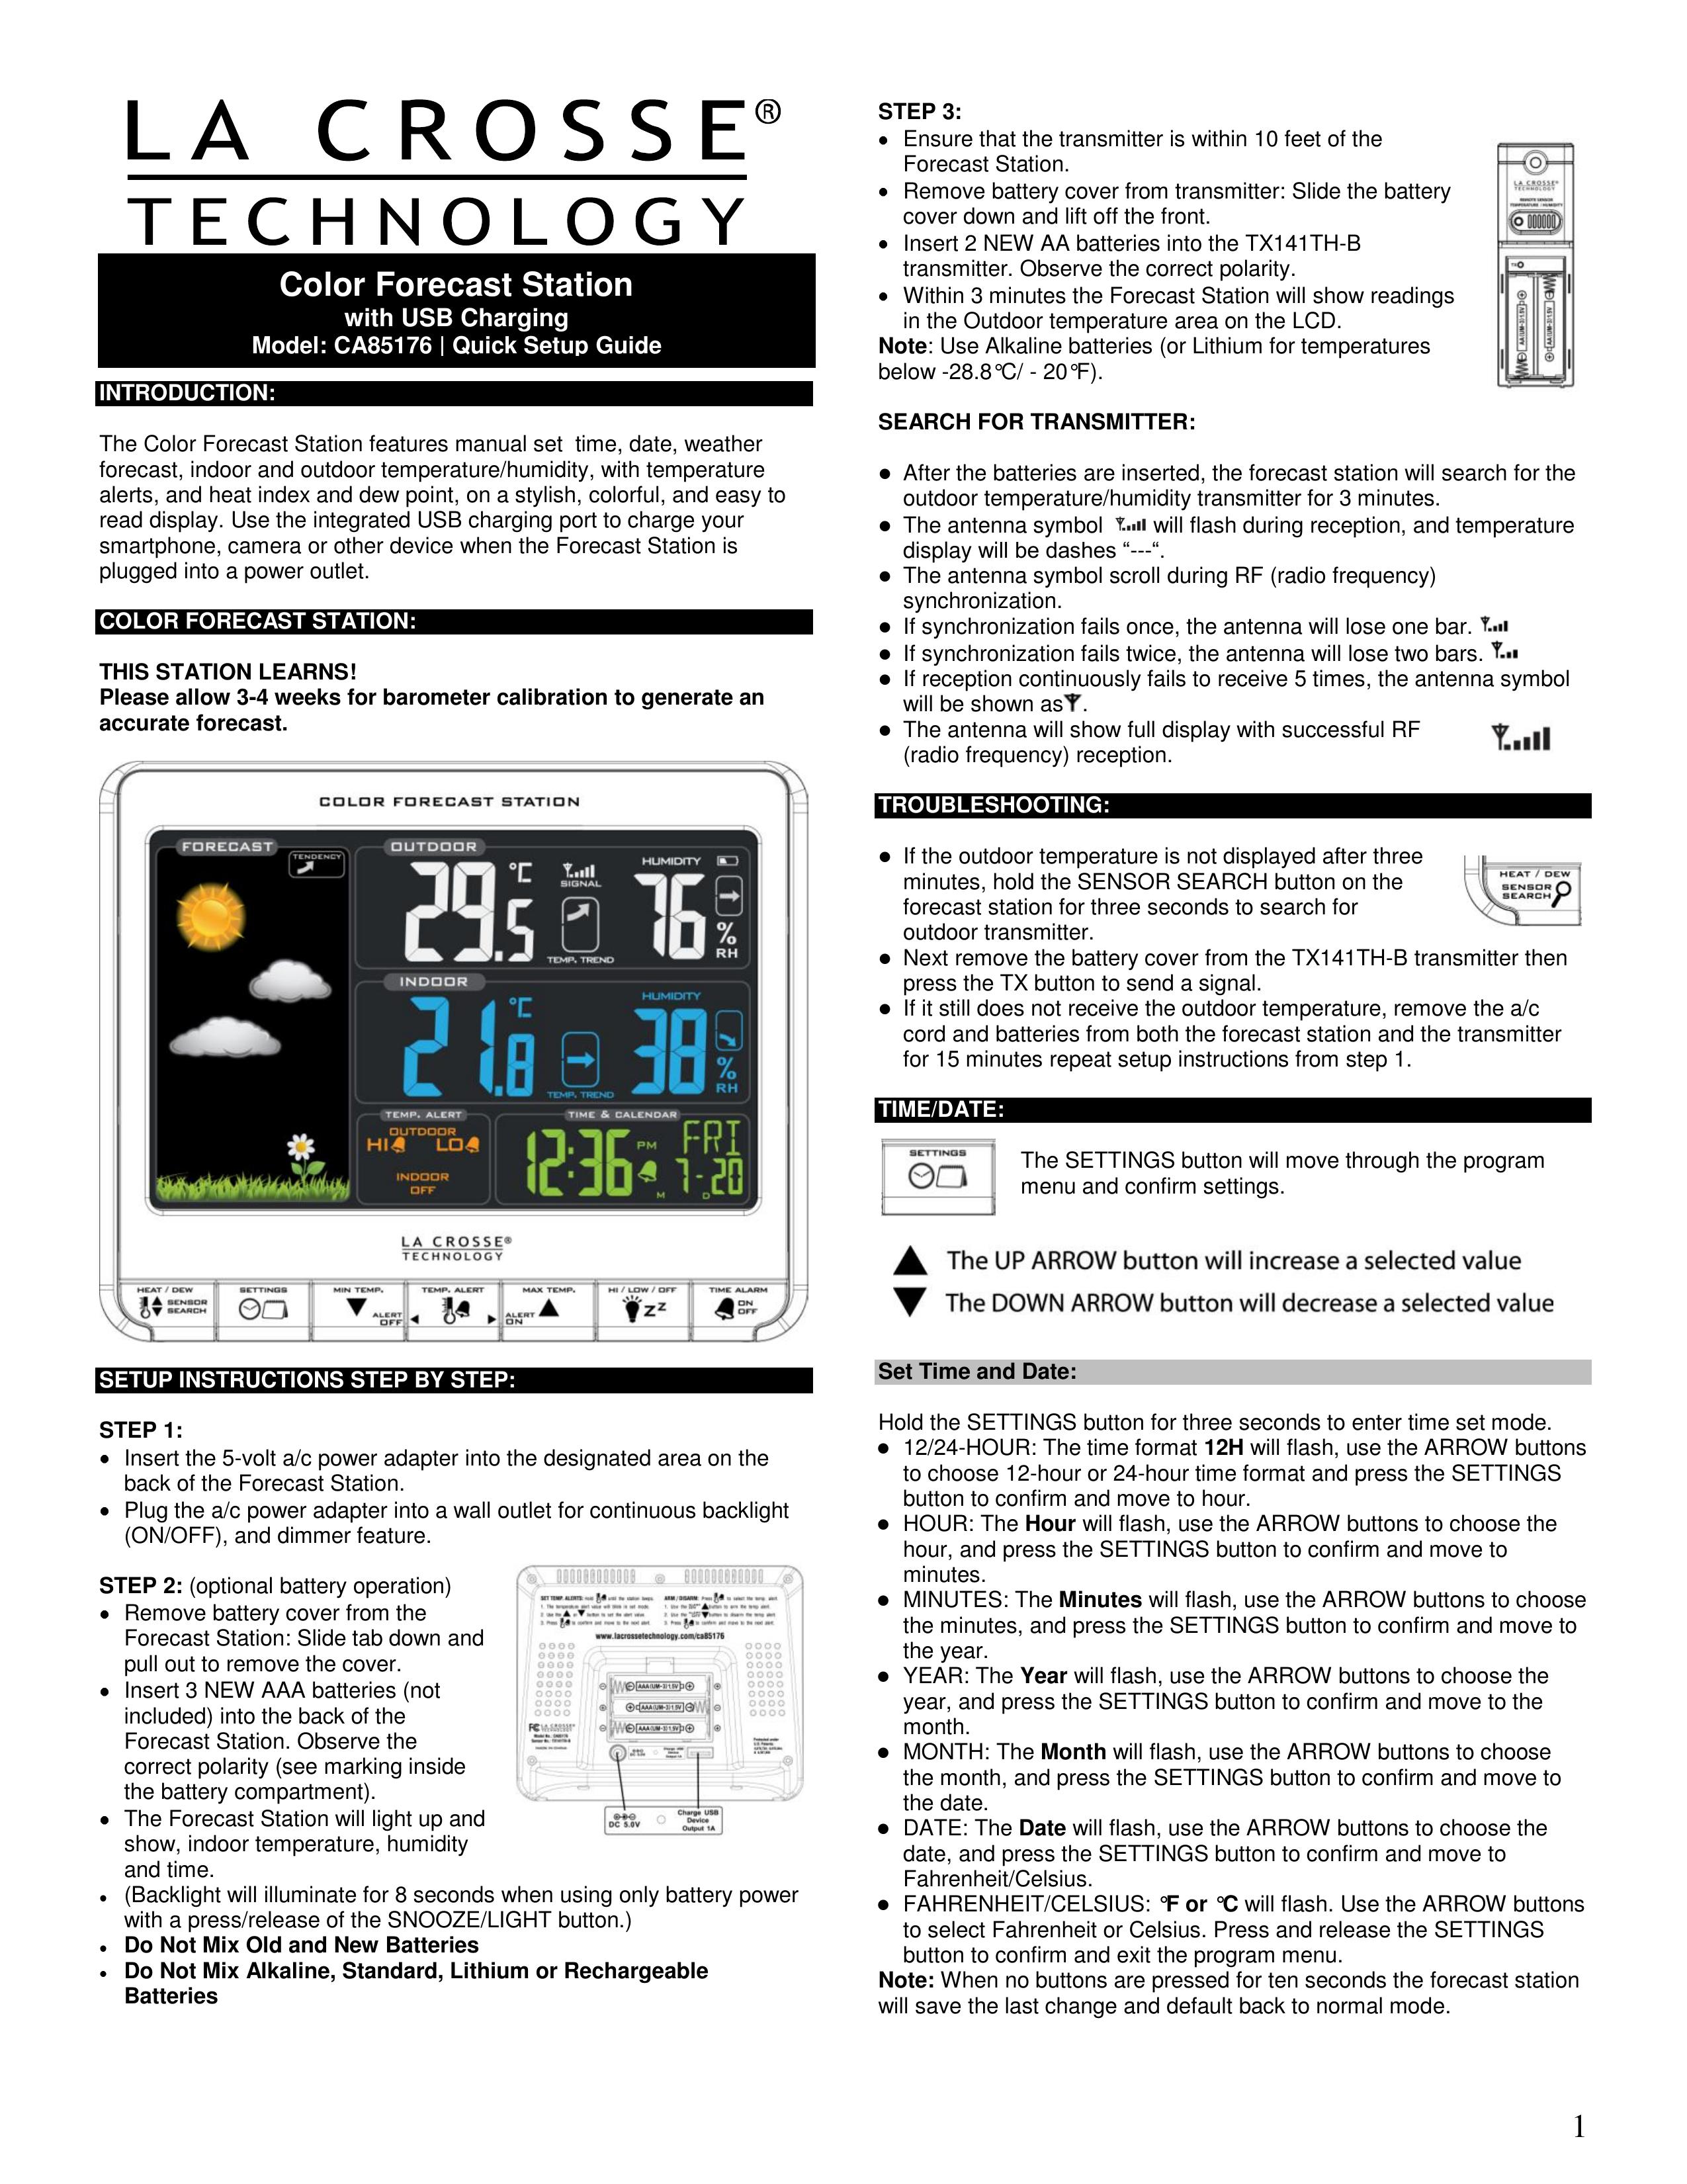 La Crosse Technology CA85176 Weather Radio User Manual